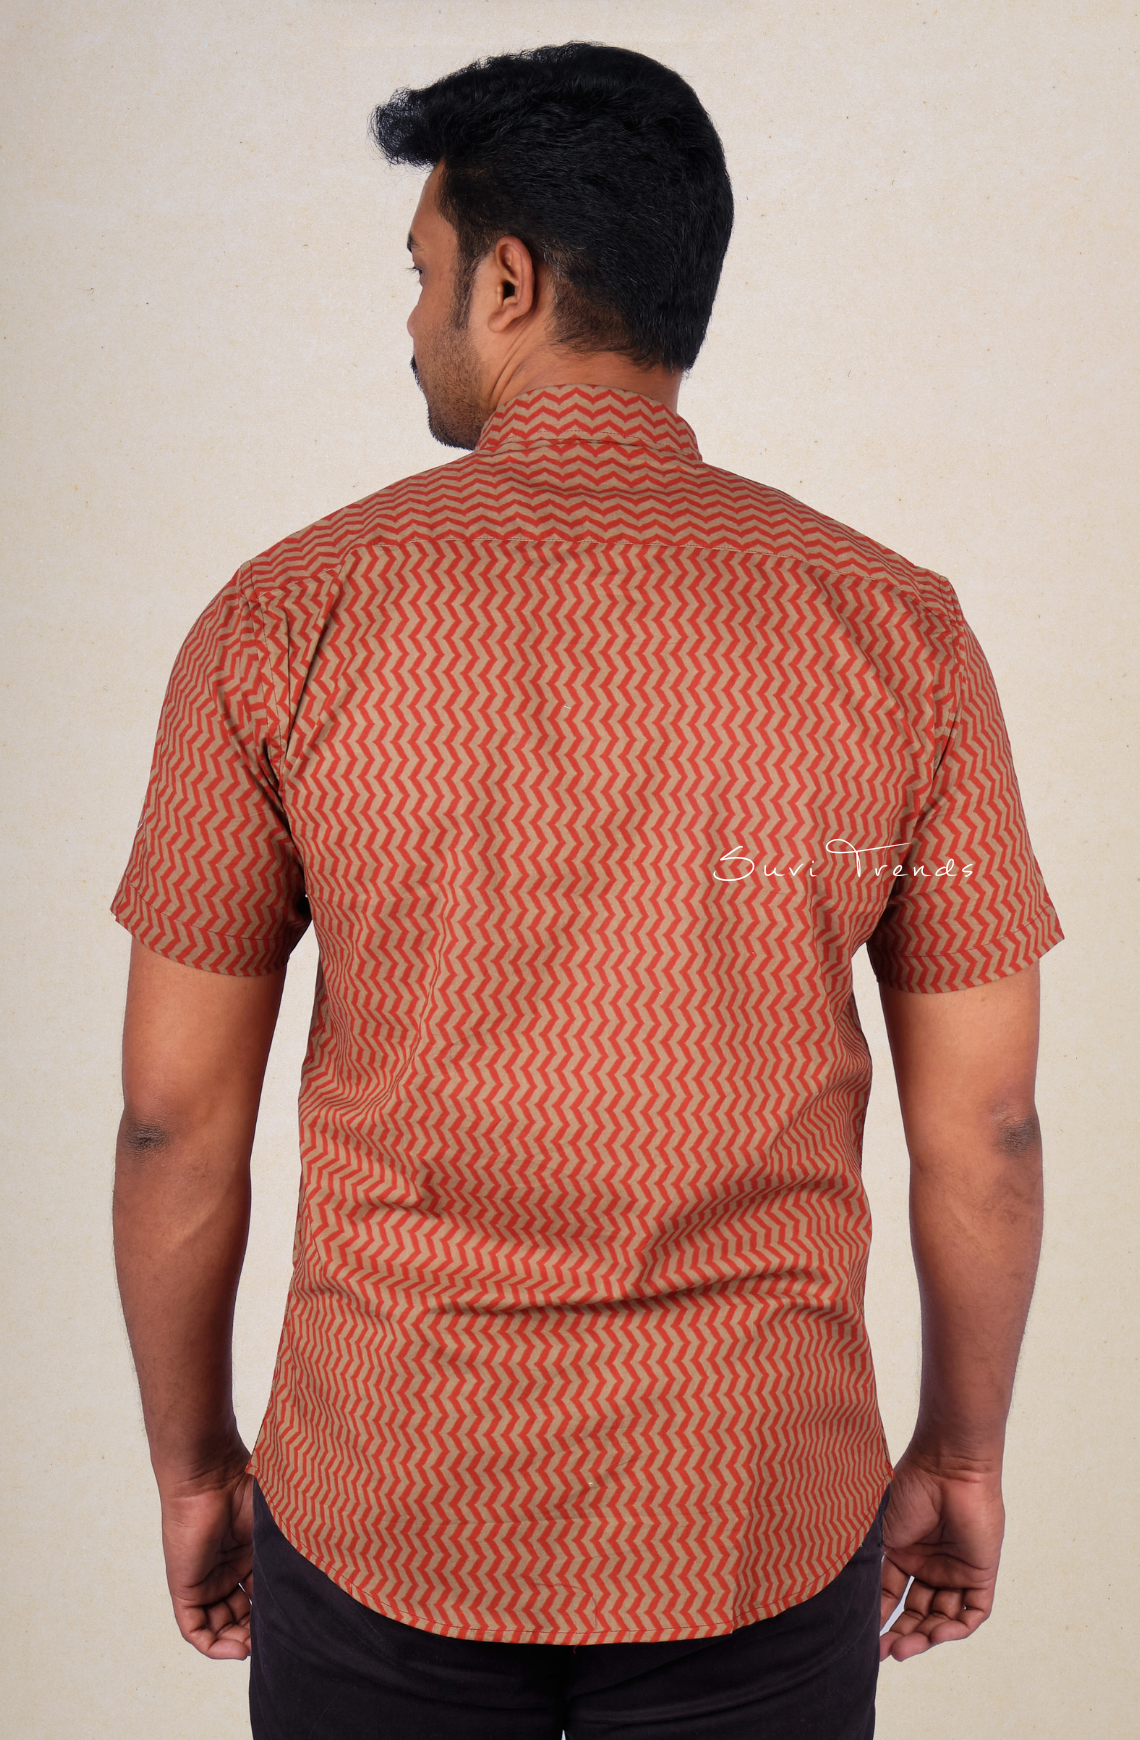 Men's Chevron Printed Cotton Shirt - Brown & Red